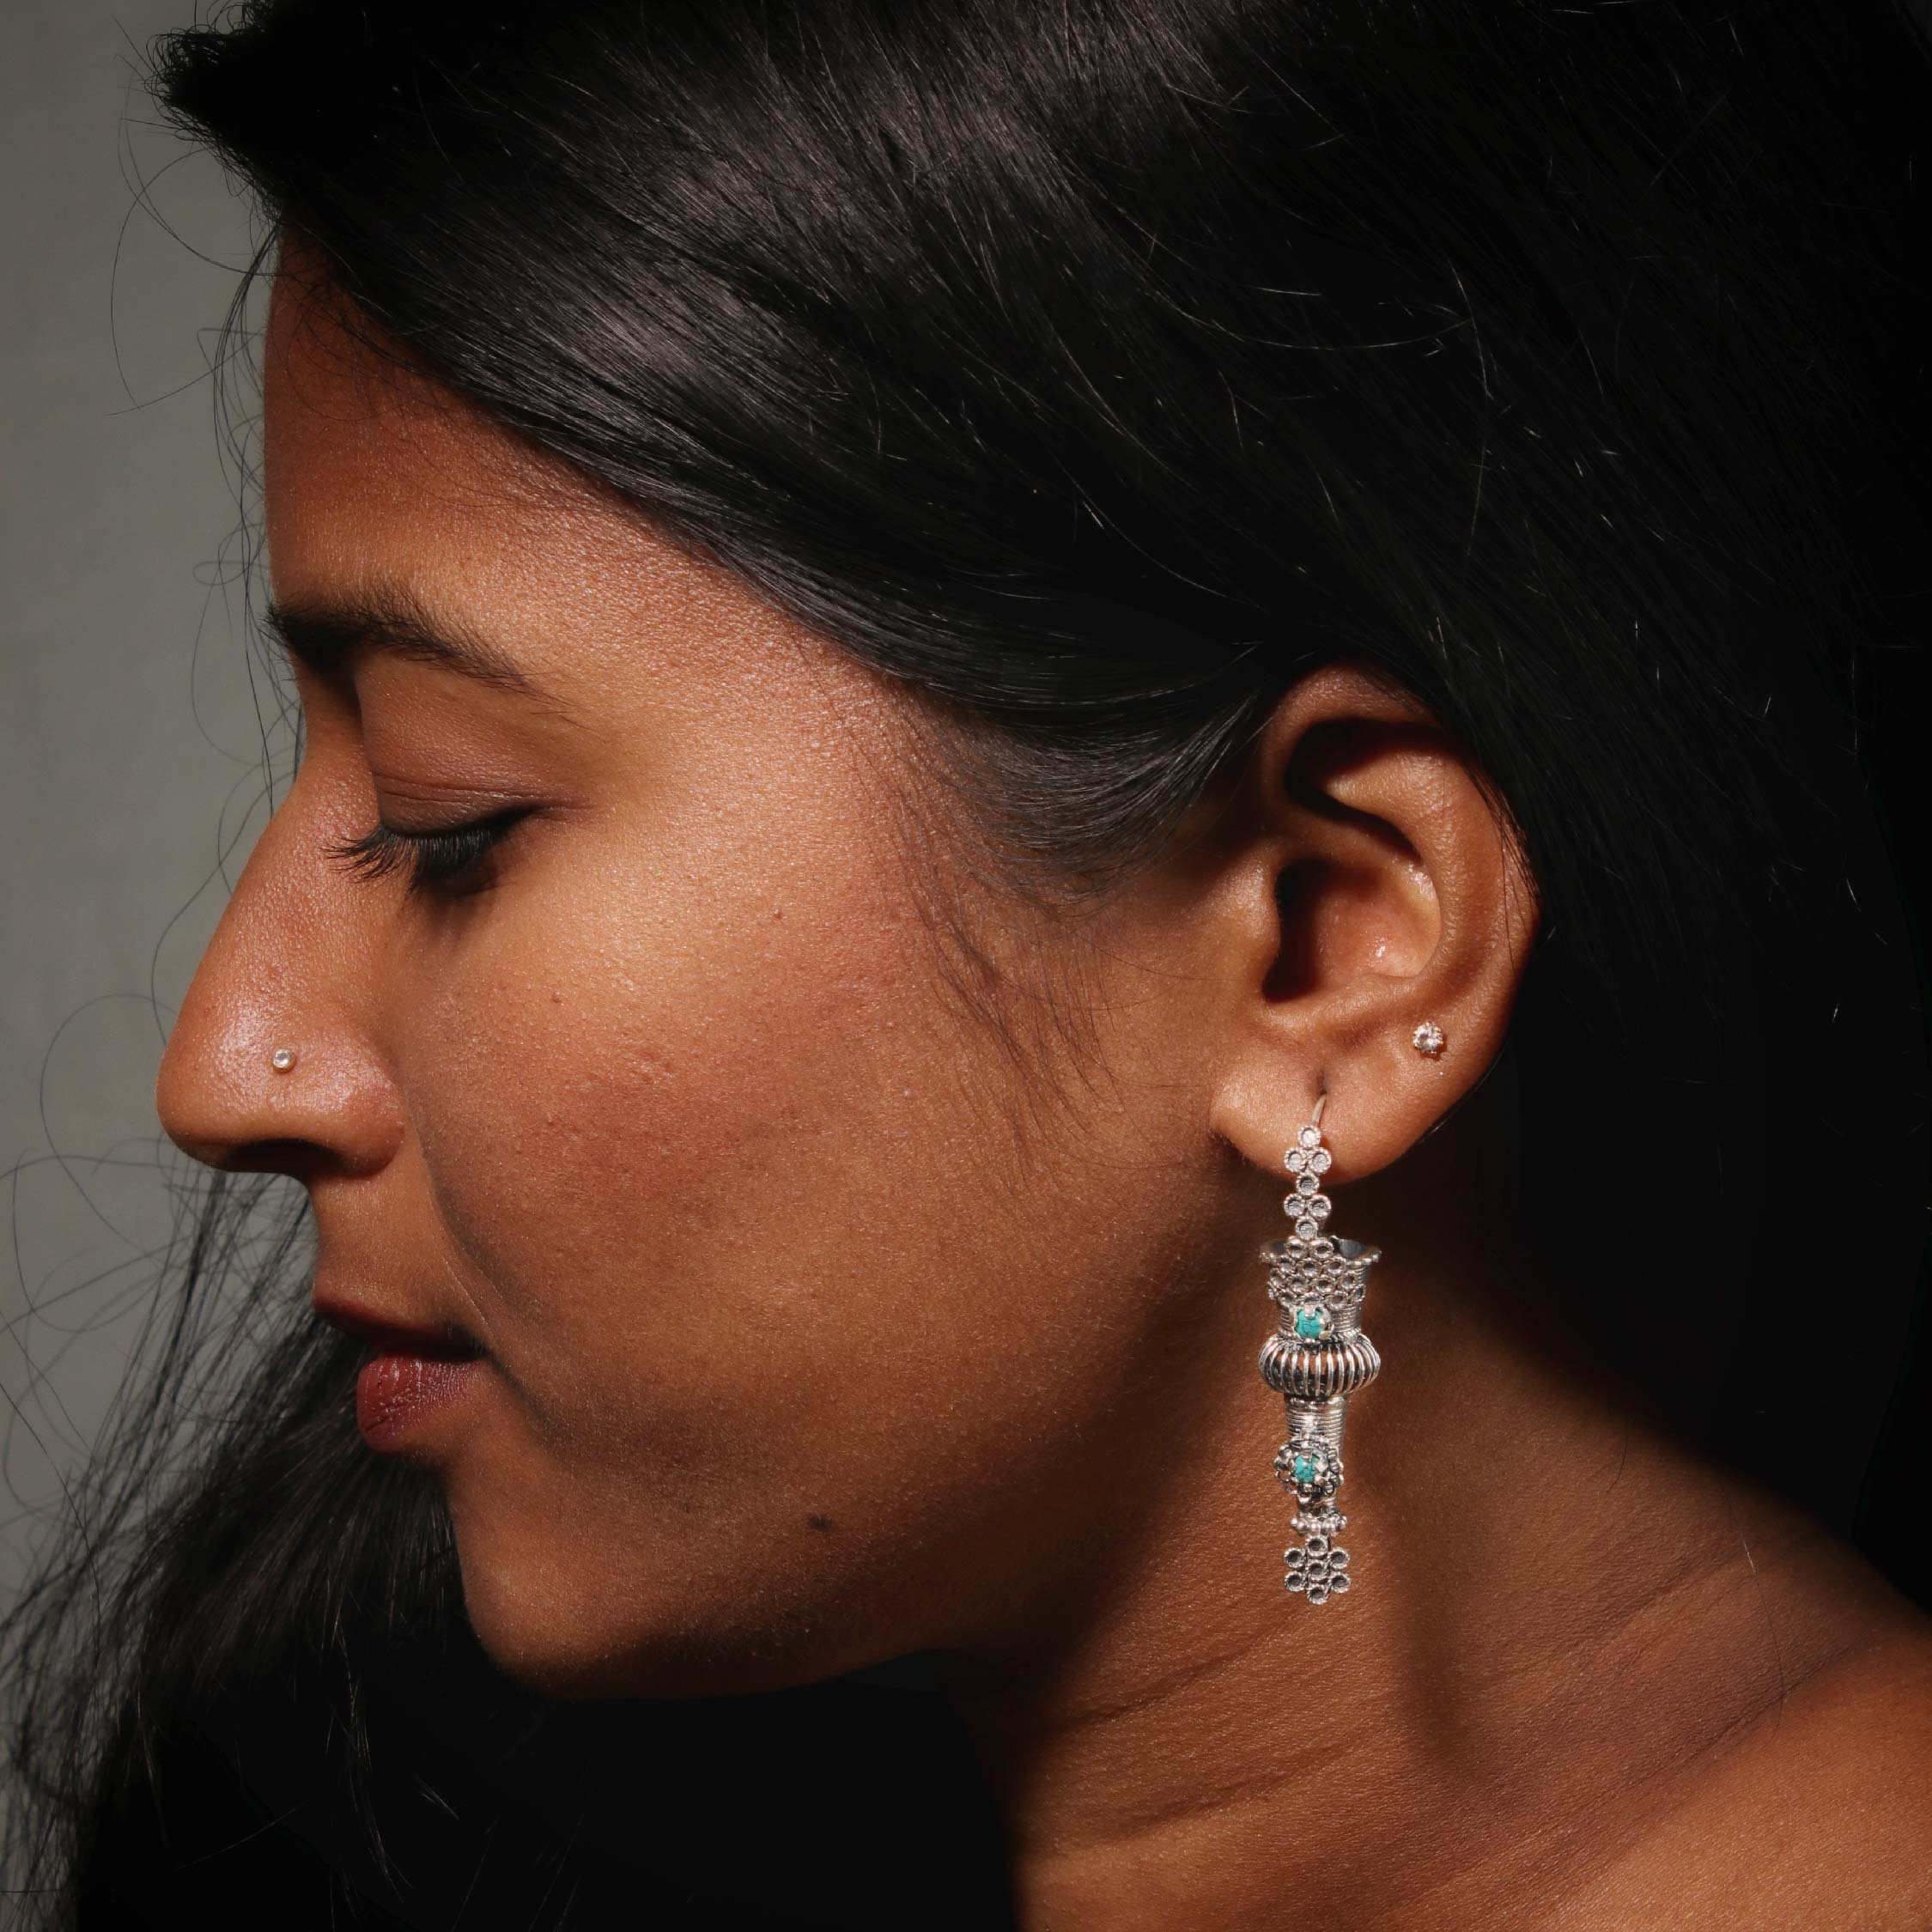 Nagali silver earrings by Moha